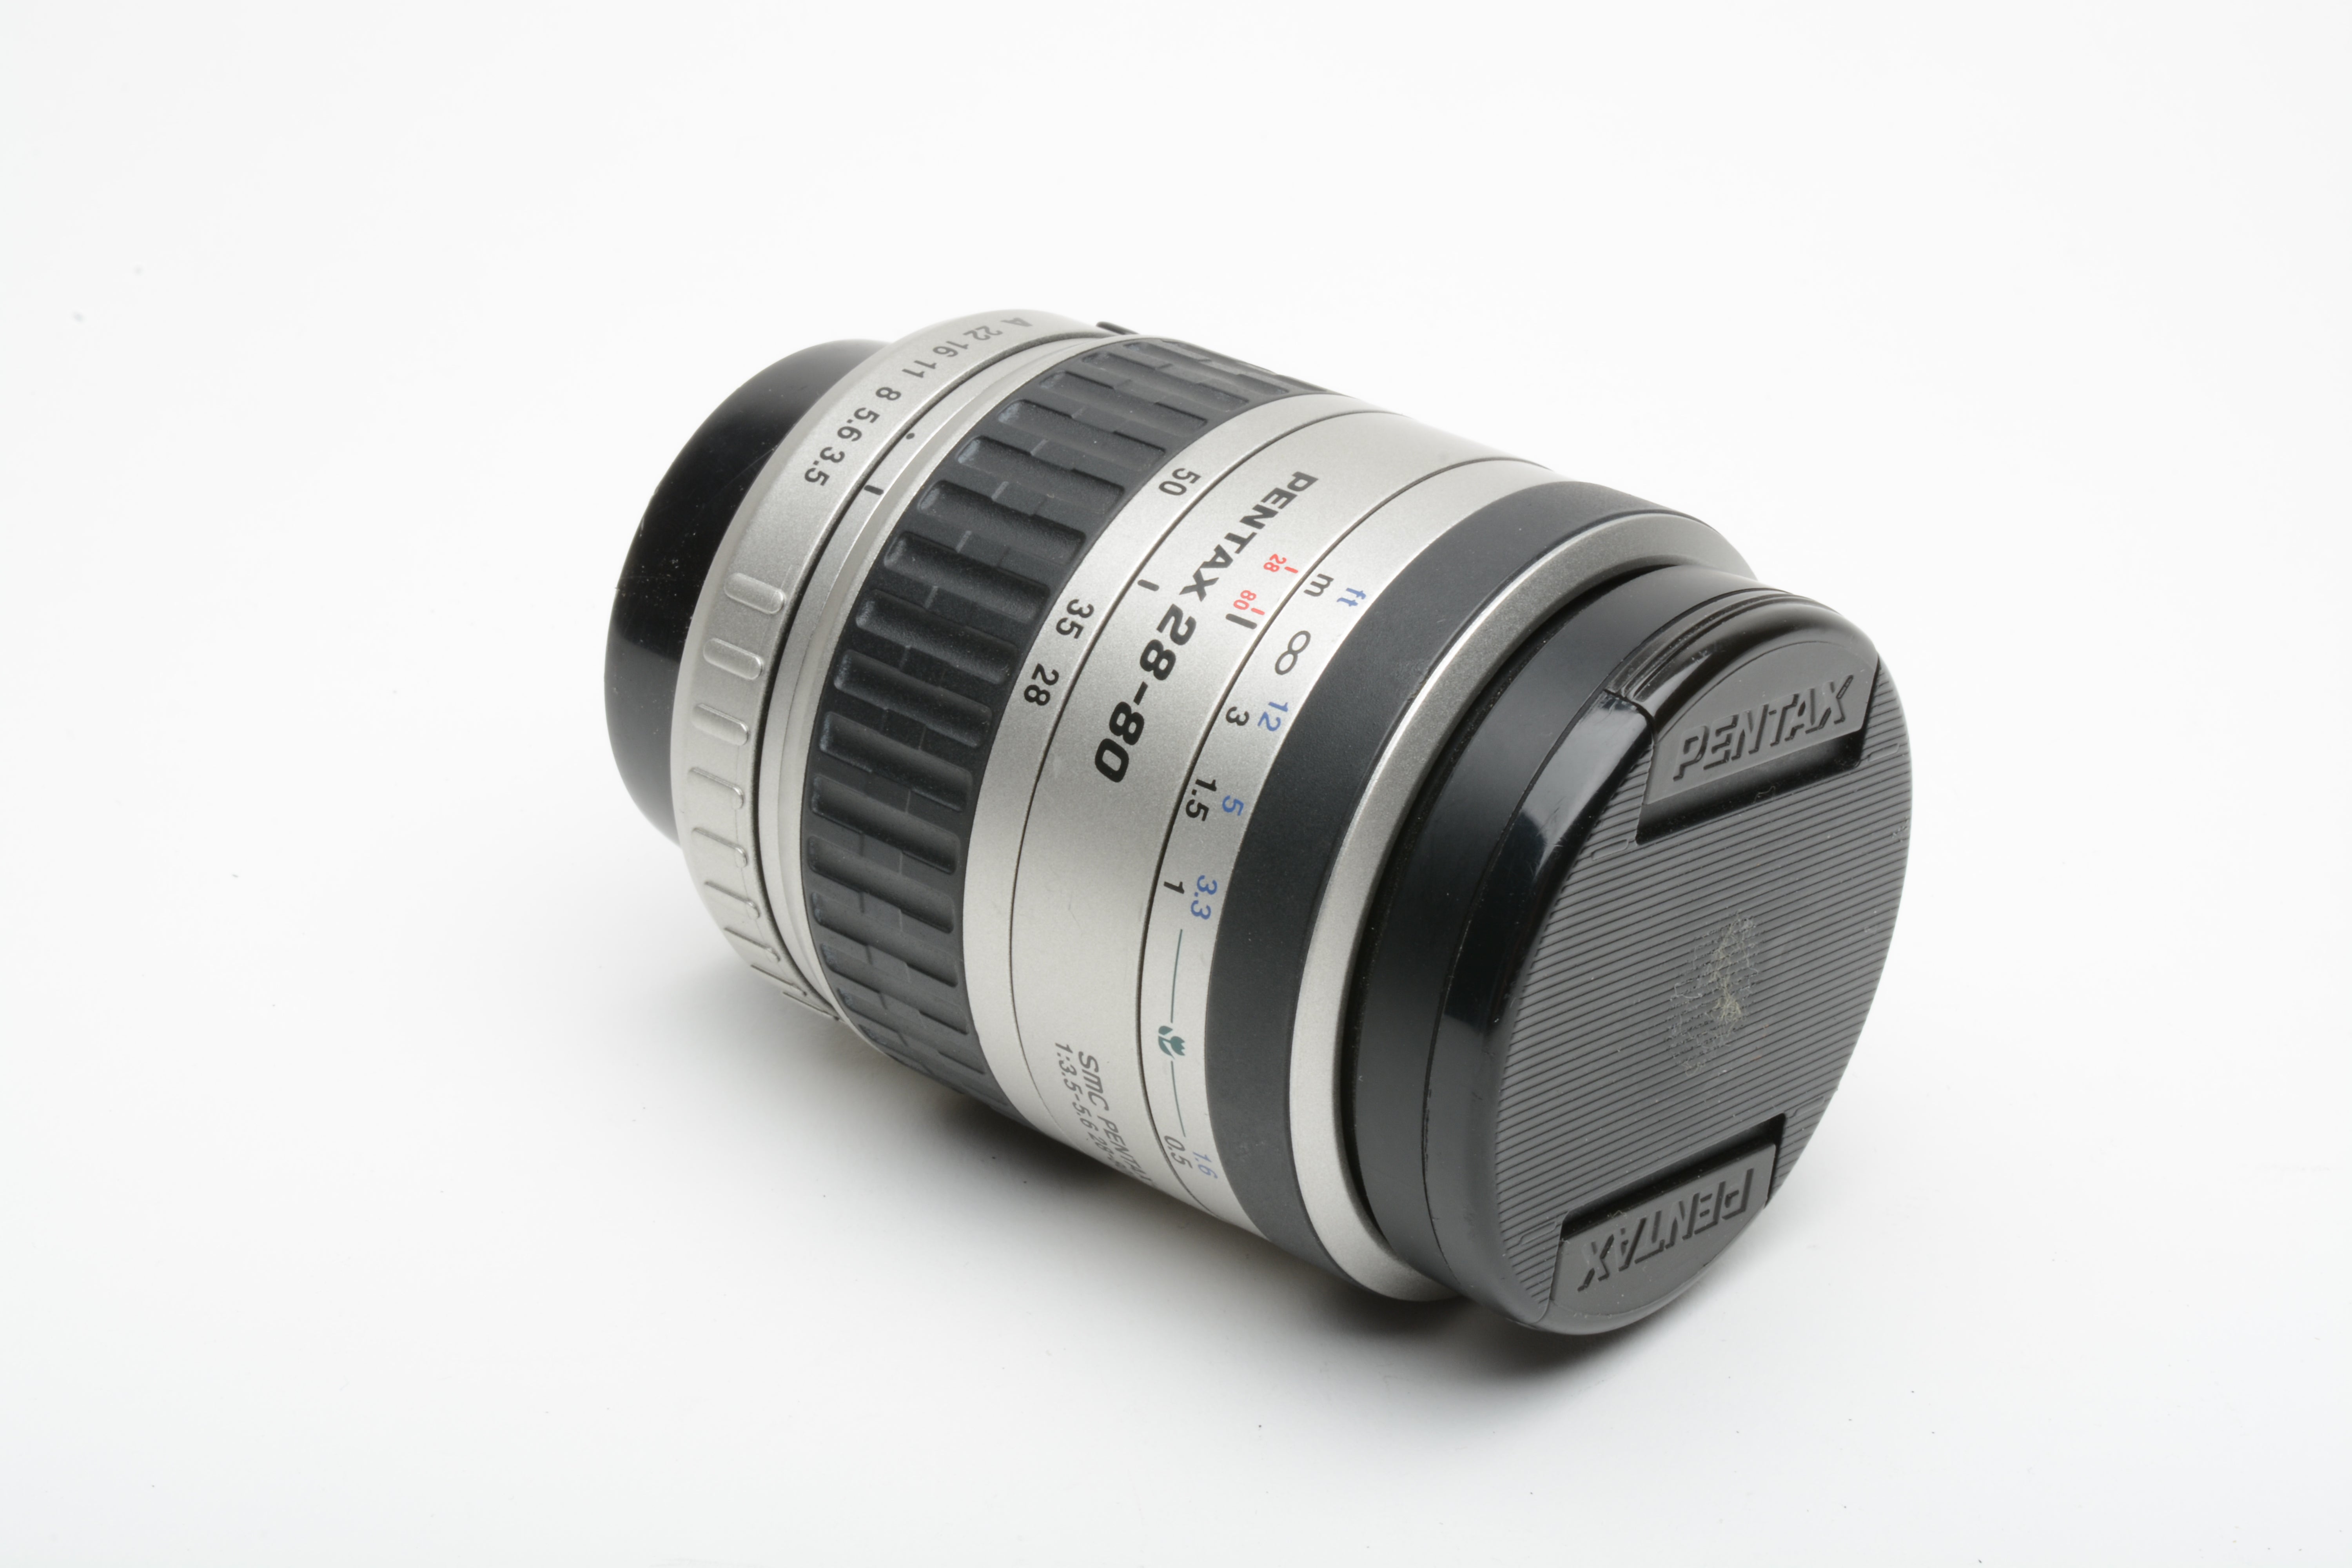 Pentax-FA 28-80mm f3.5-5.6 zoom lens